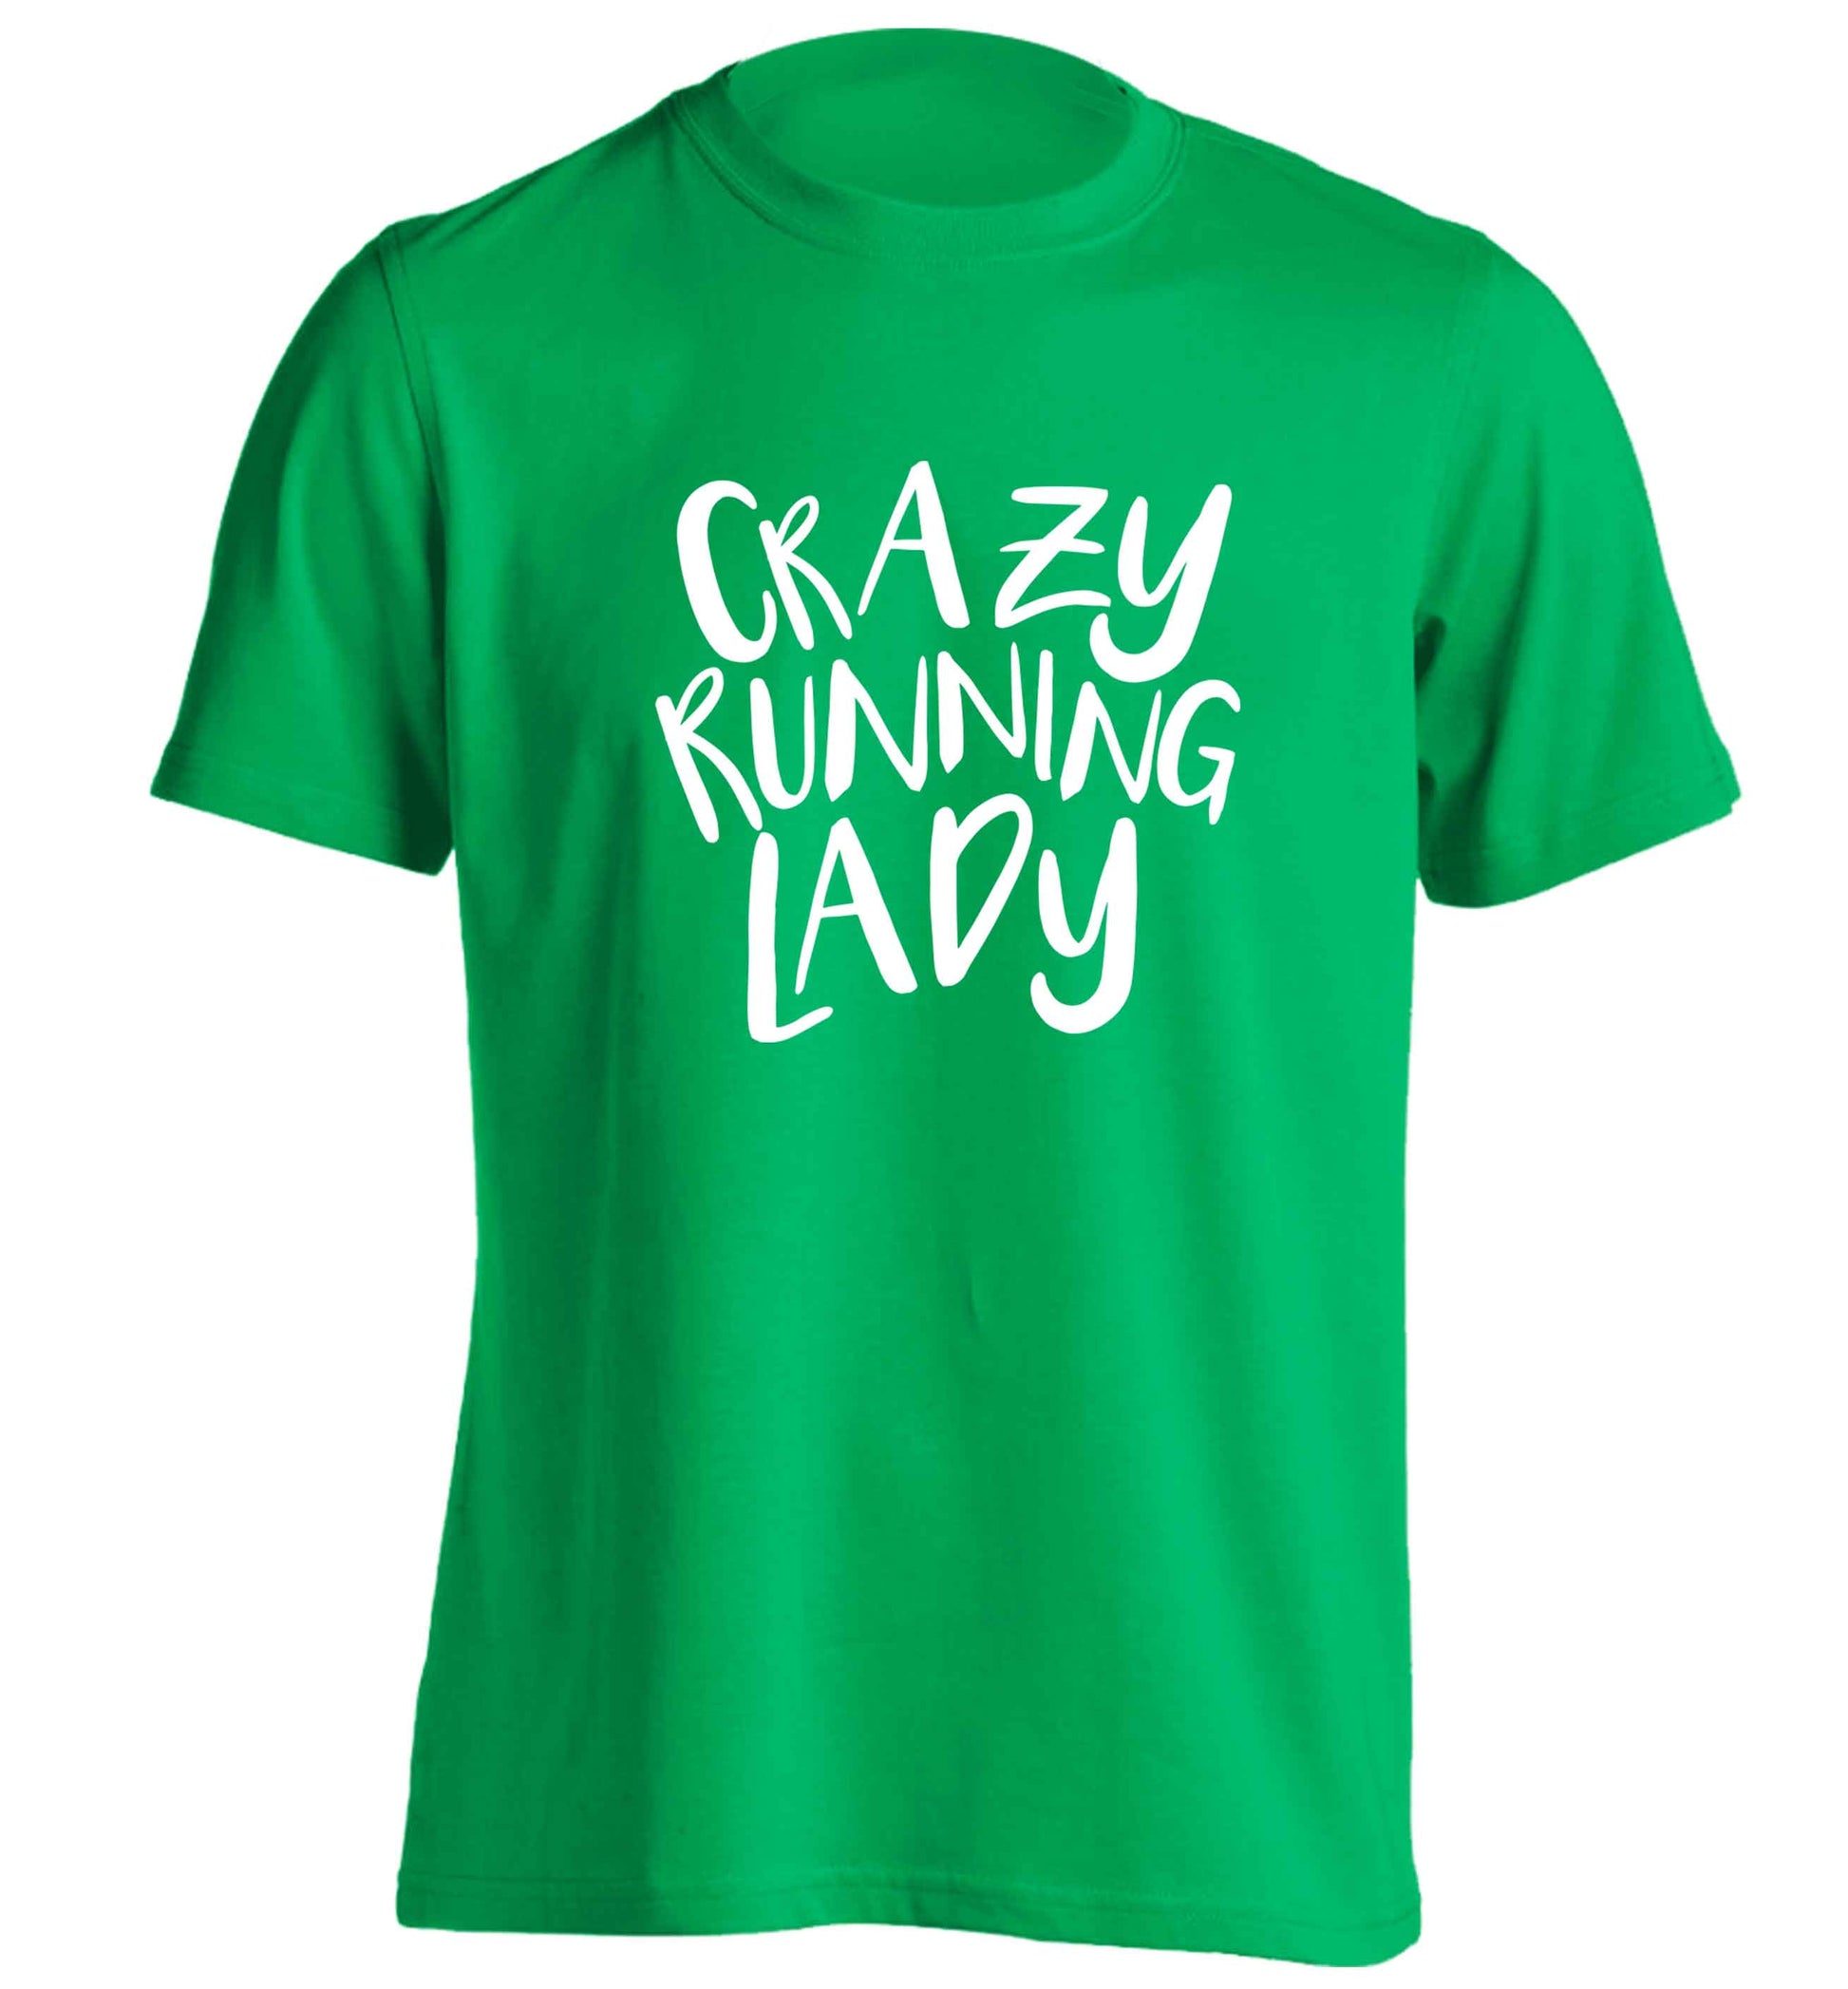 Crazy running lady adults unisex green Tshirt 2XL